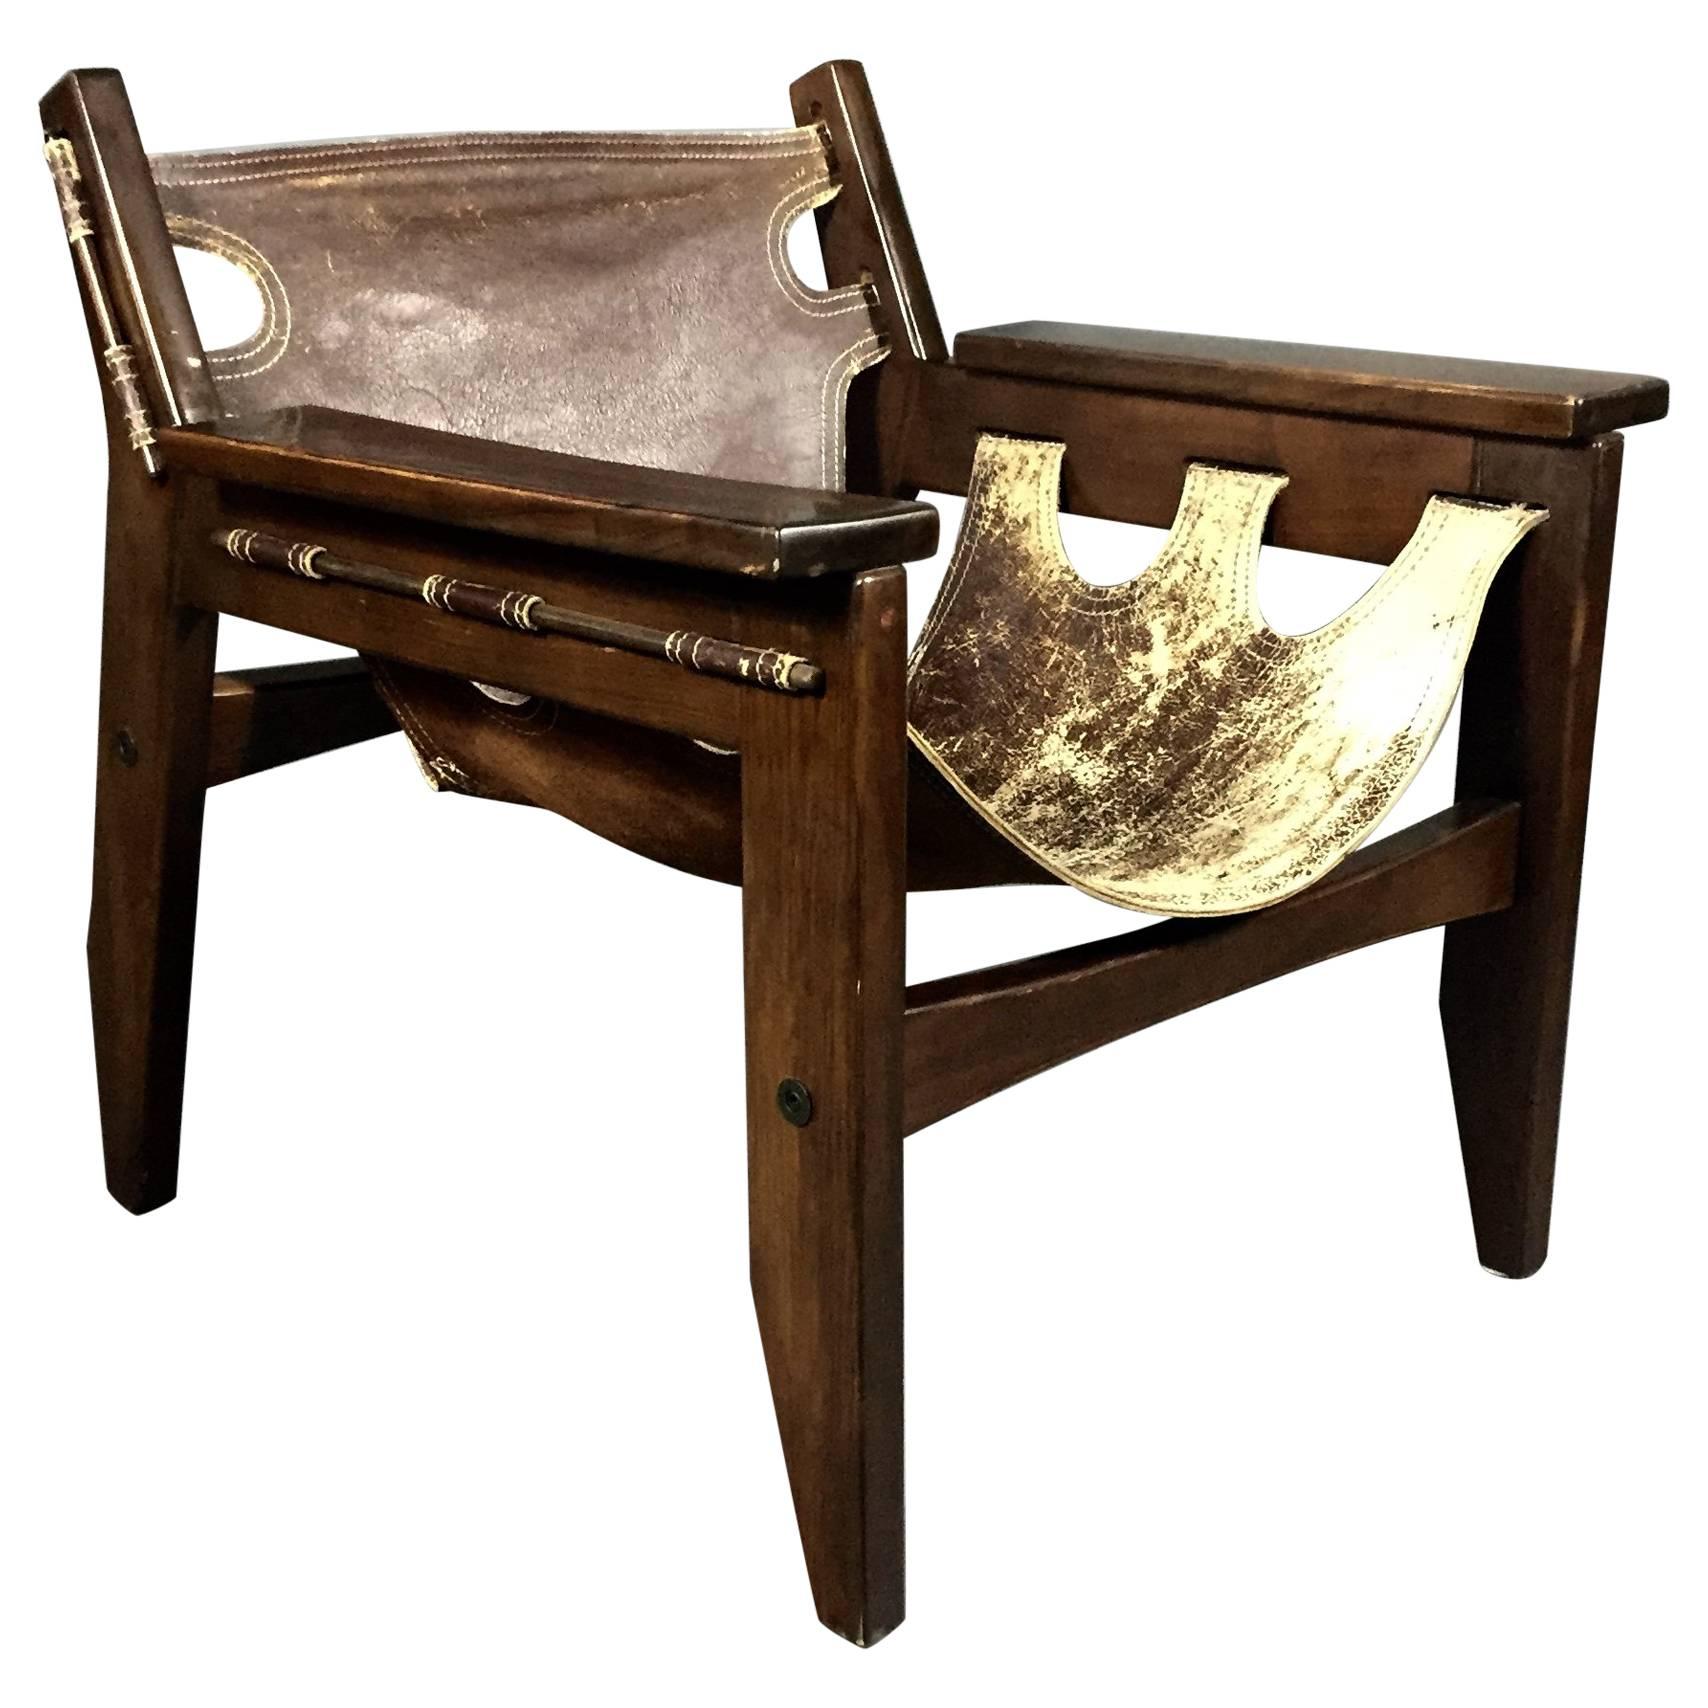 Sergio Rodrigues "Kilin" Chair, Jacaranda and Leather, Brazil, 1973